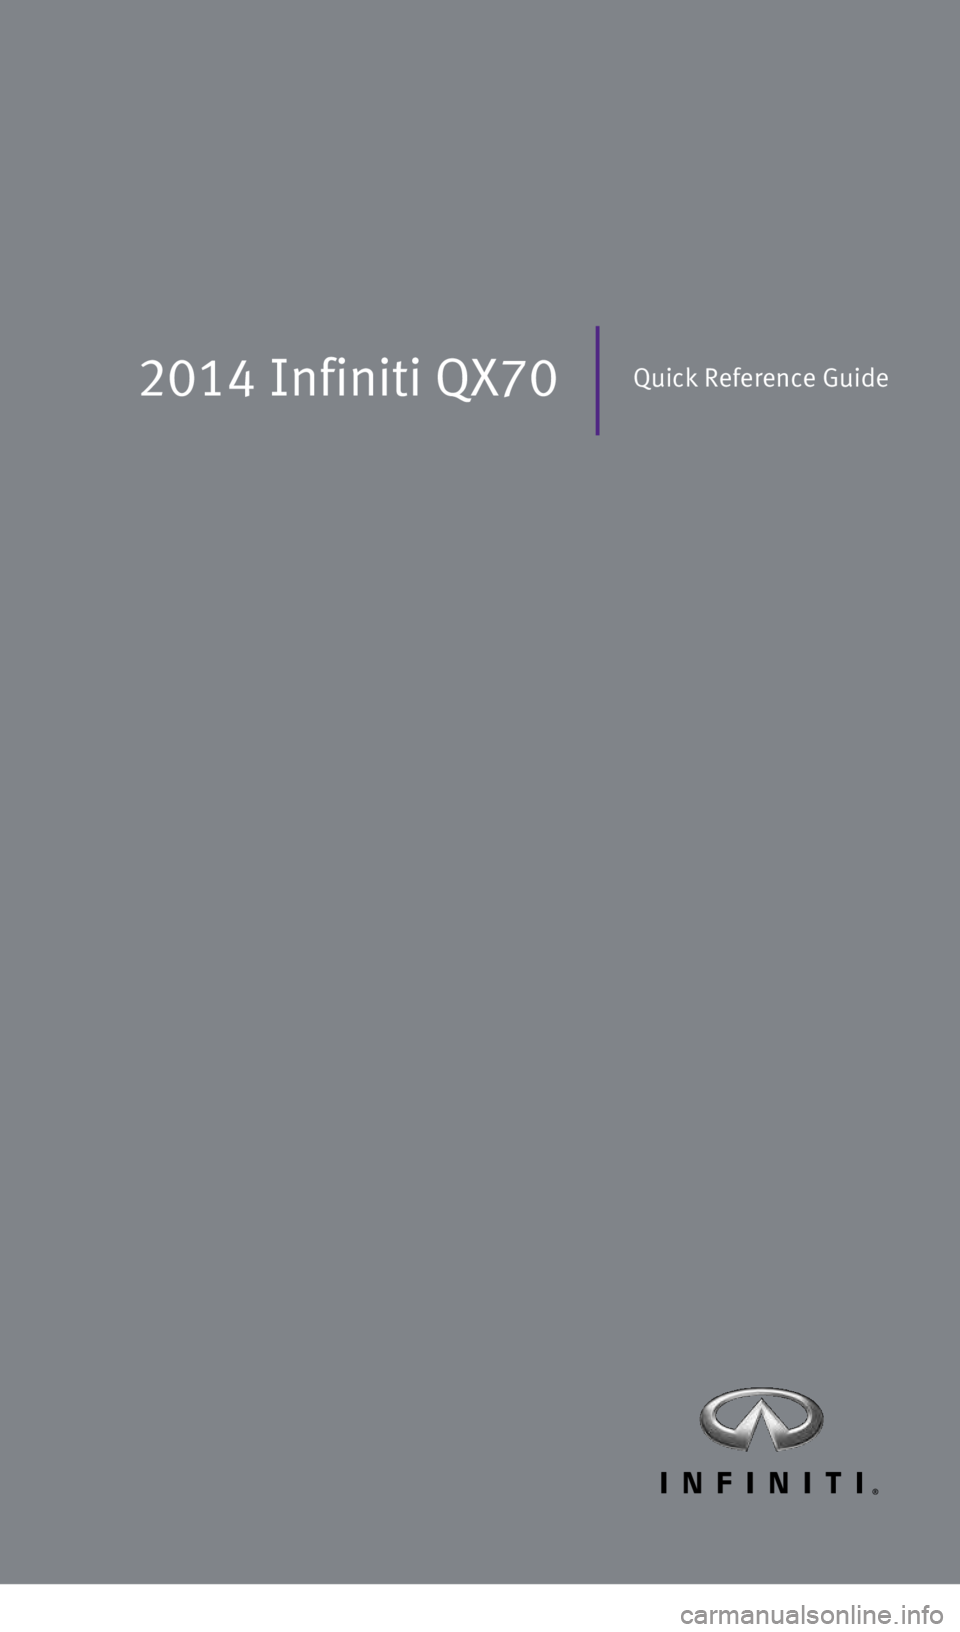 INFINITI QX70 2014  Quick Reference Guide 2014 Infiniti QX70Quick Reference Guide
1354681_14a_Infiniti_QX70_QRG_052813.indd   35/28/13   11:59 AM 